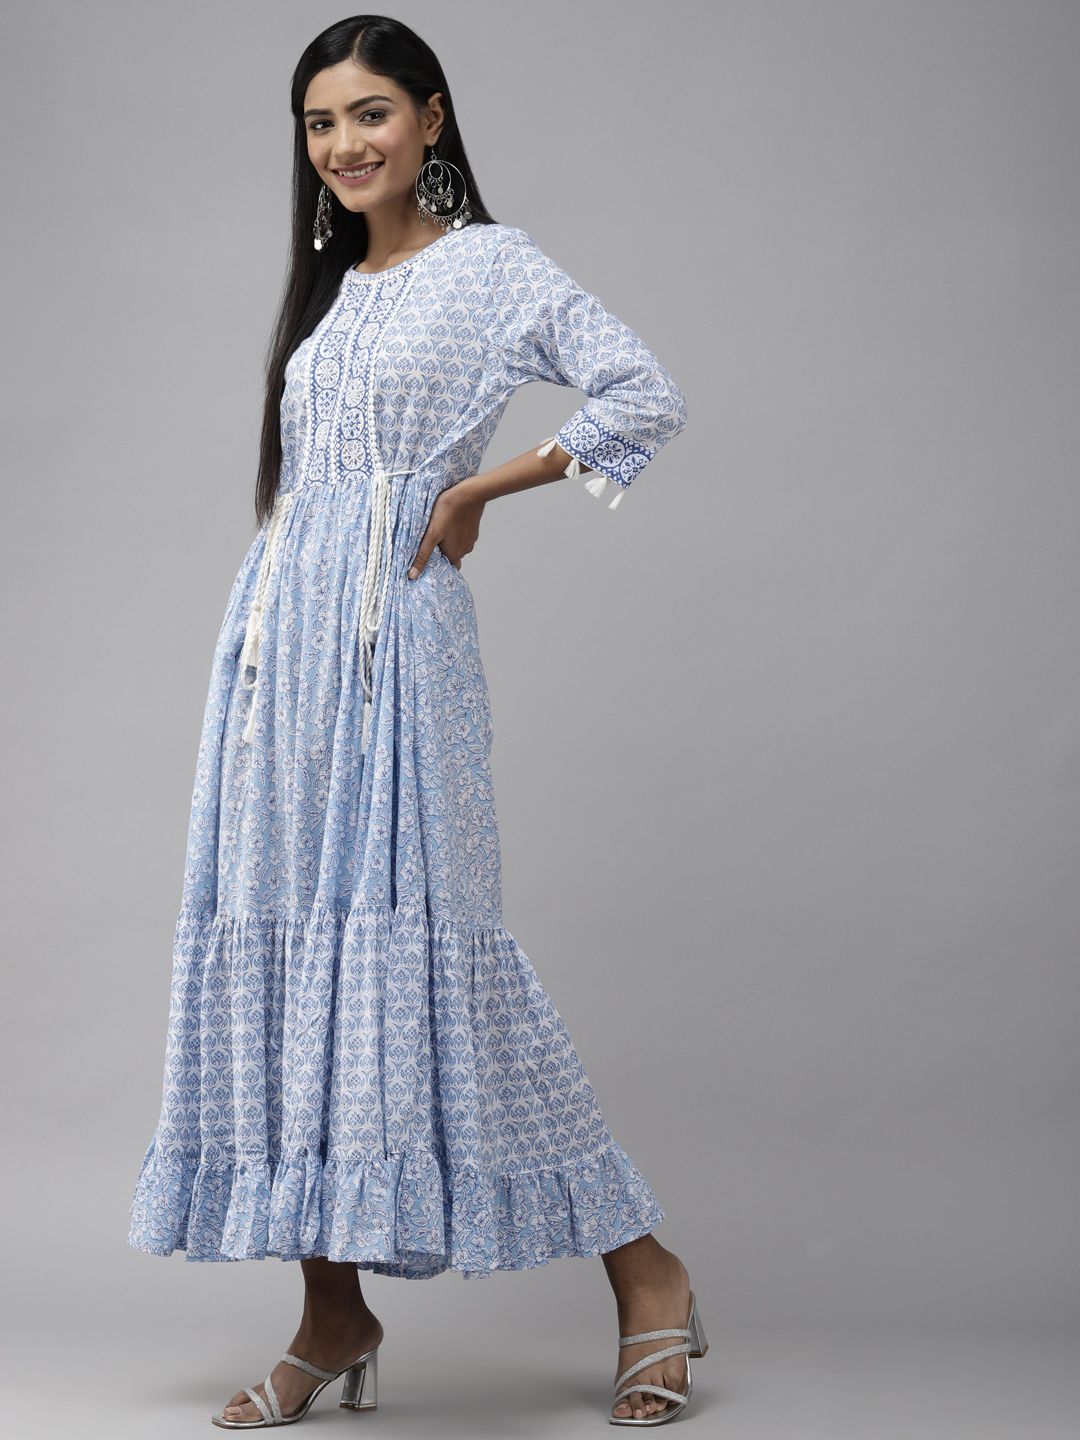 White & Blue Ethnic Dress-Yufta Store-3107DRSBLS